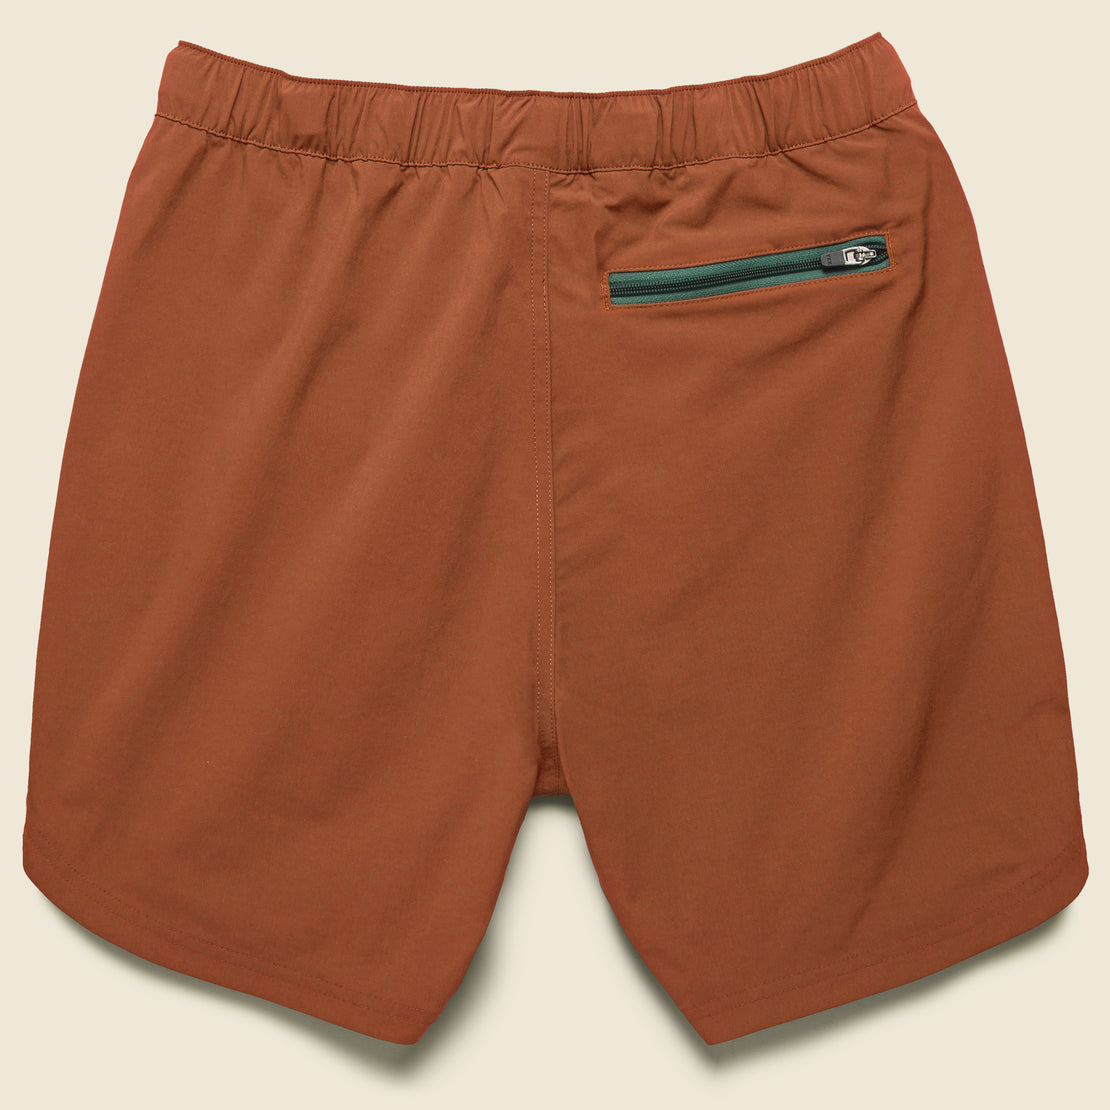 River Shorts - Brick - Topo Designs - STAG Provisions - Shorts - Solid